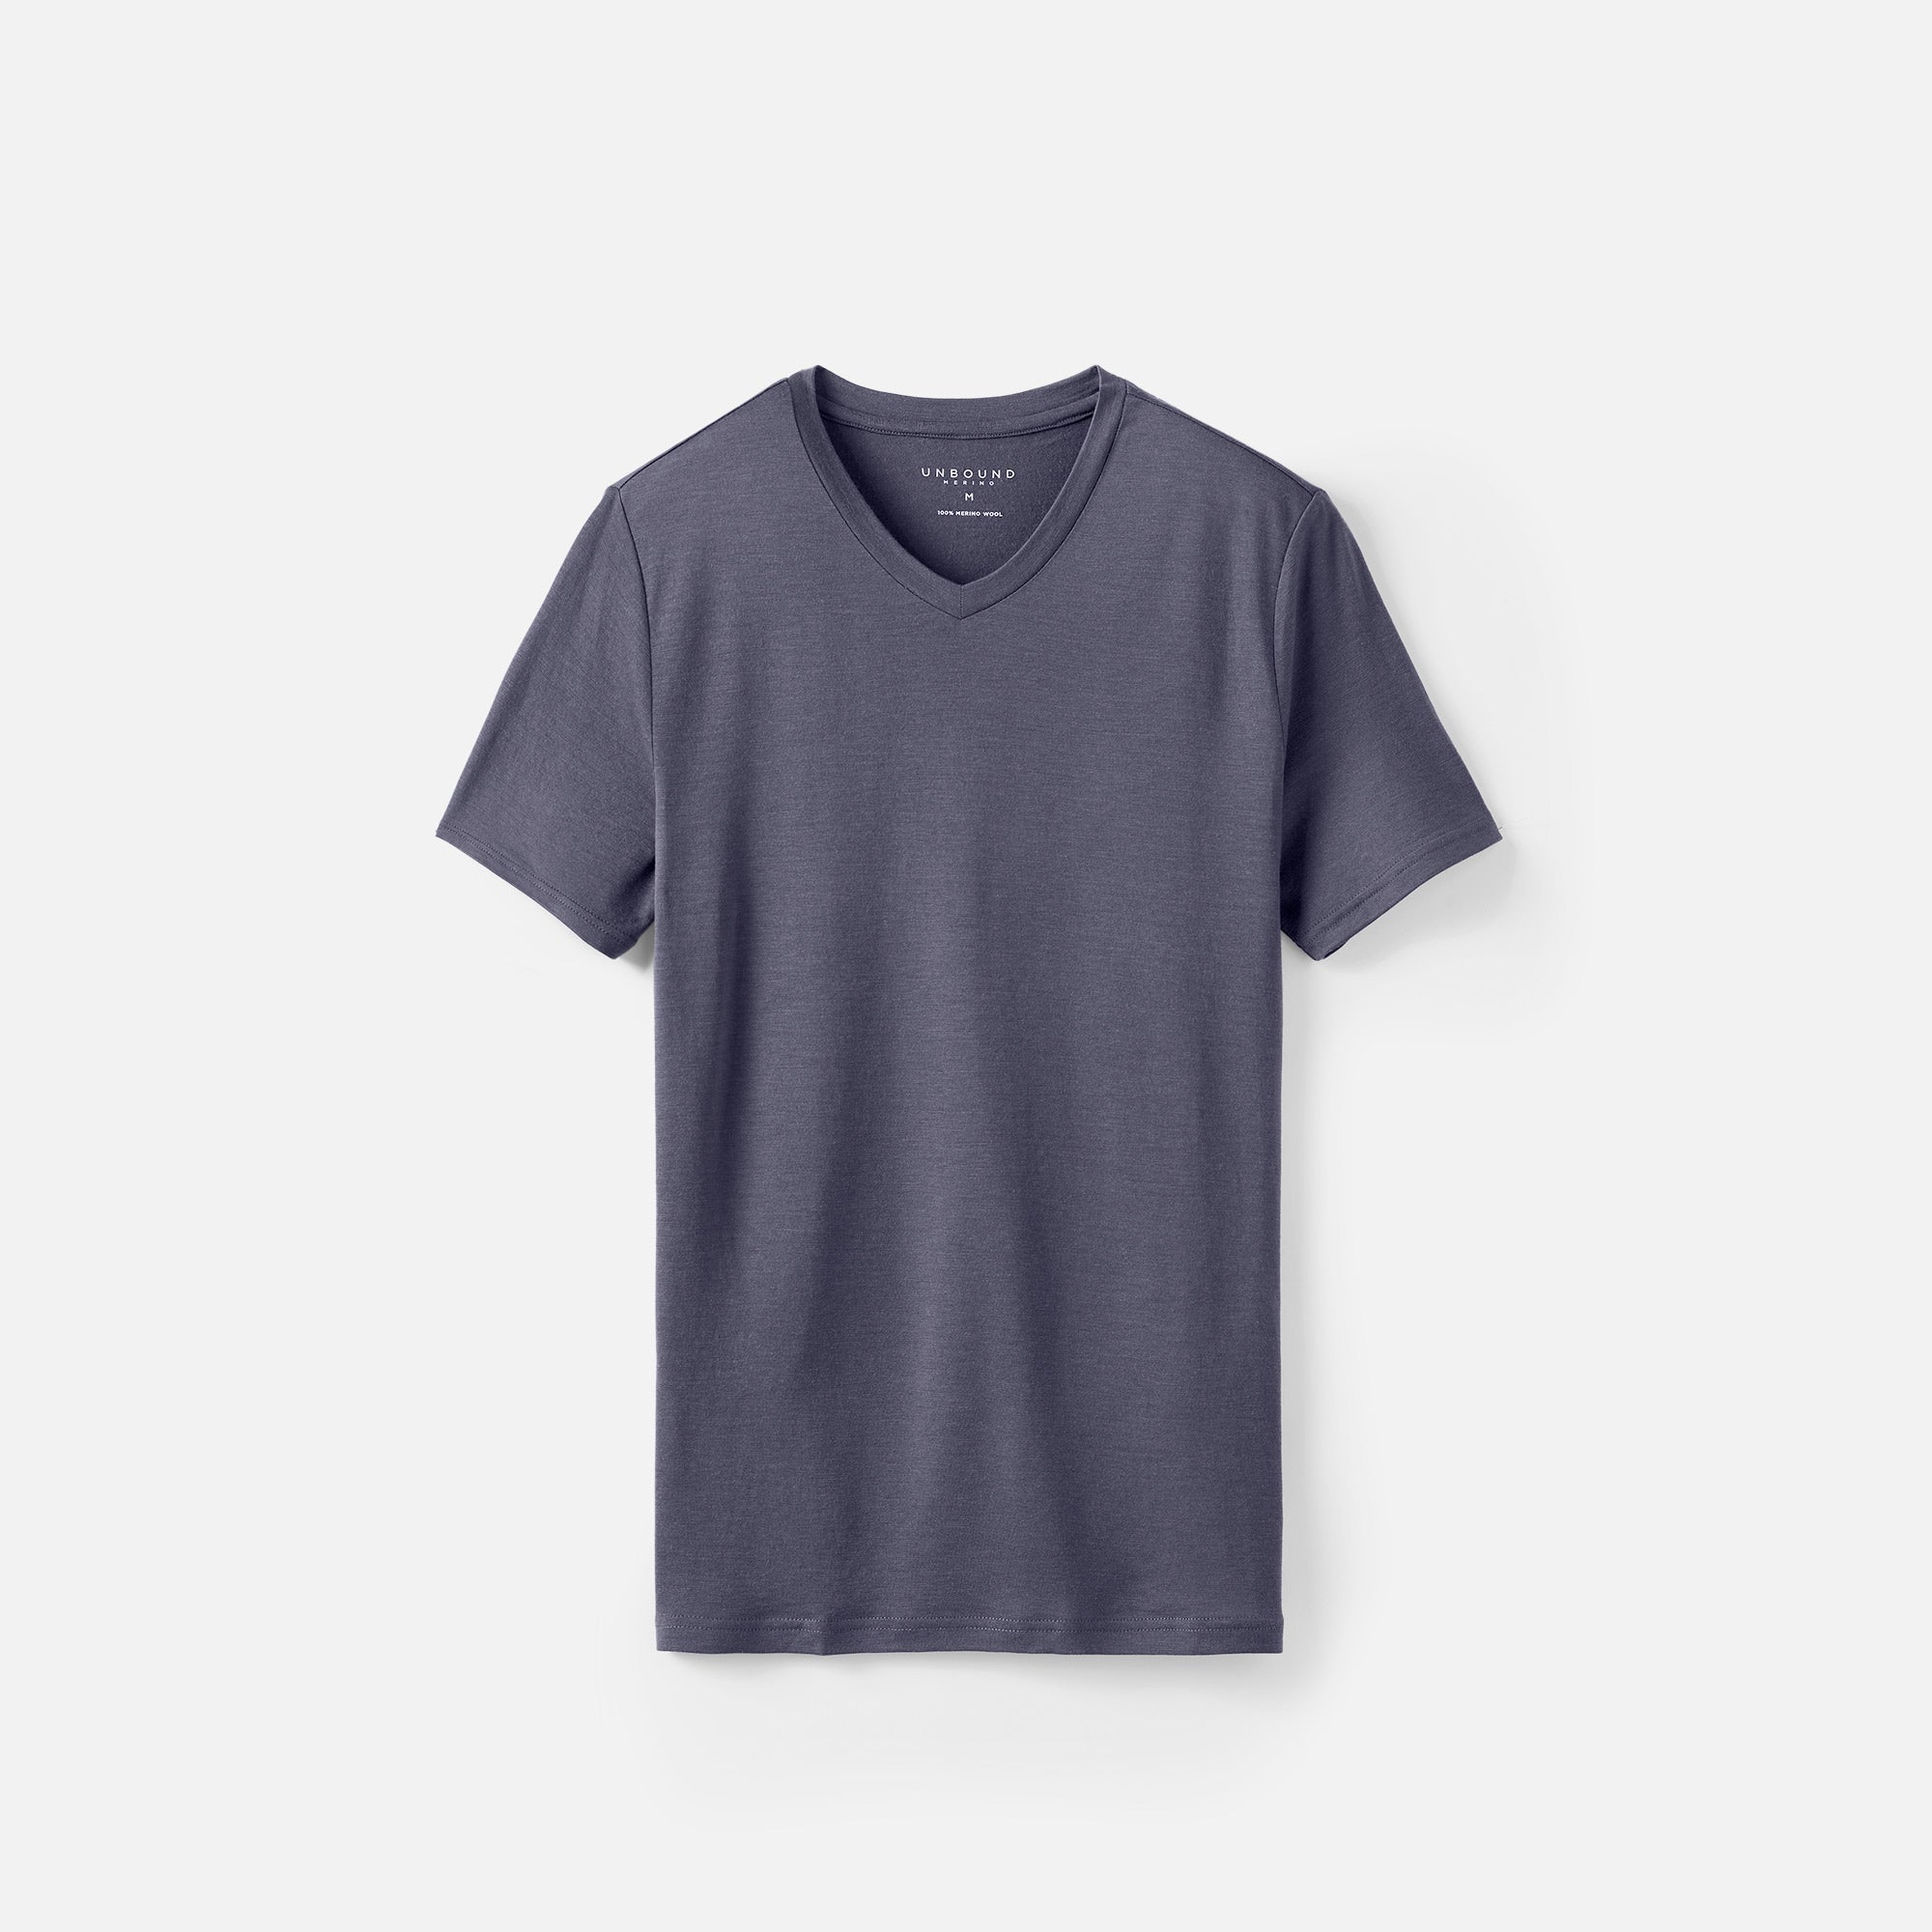 Men's Merino Wool T-Shirts | Merino Wool Shirts For Men – Unbound